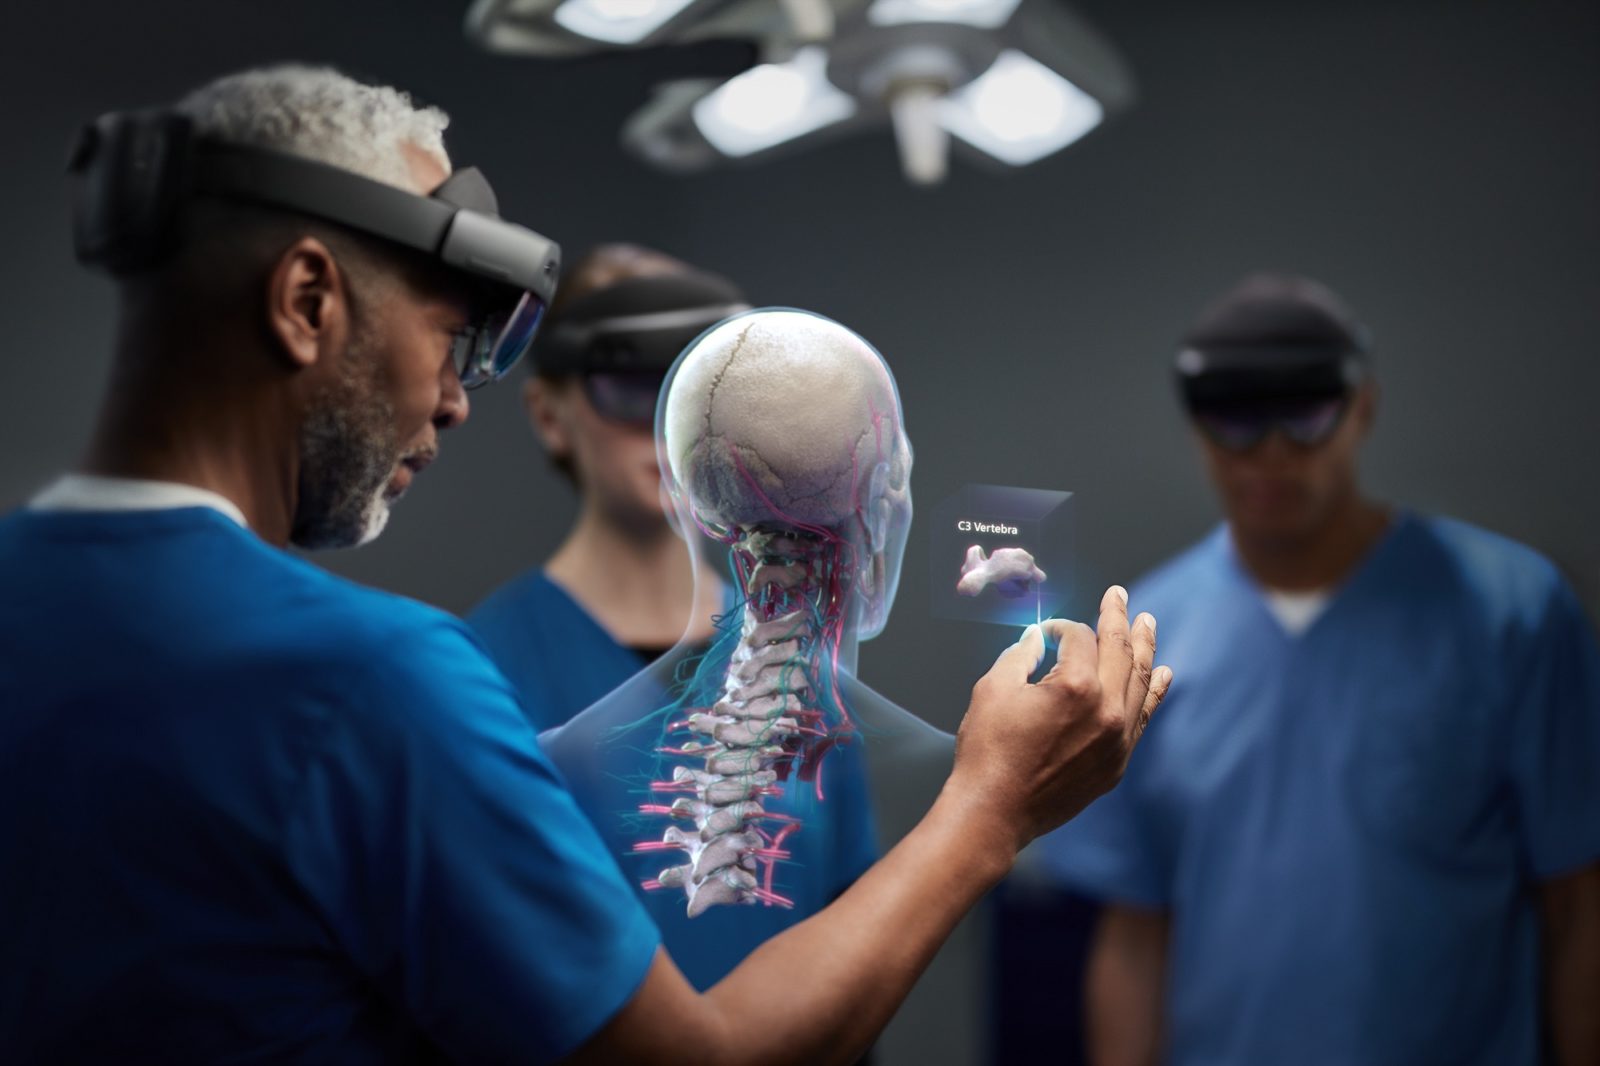 HoloLens in healthcare